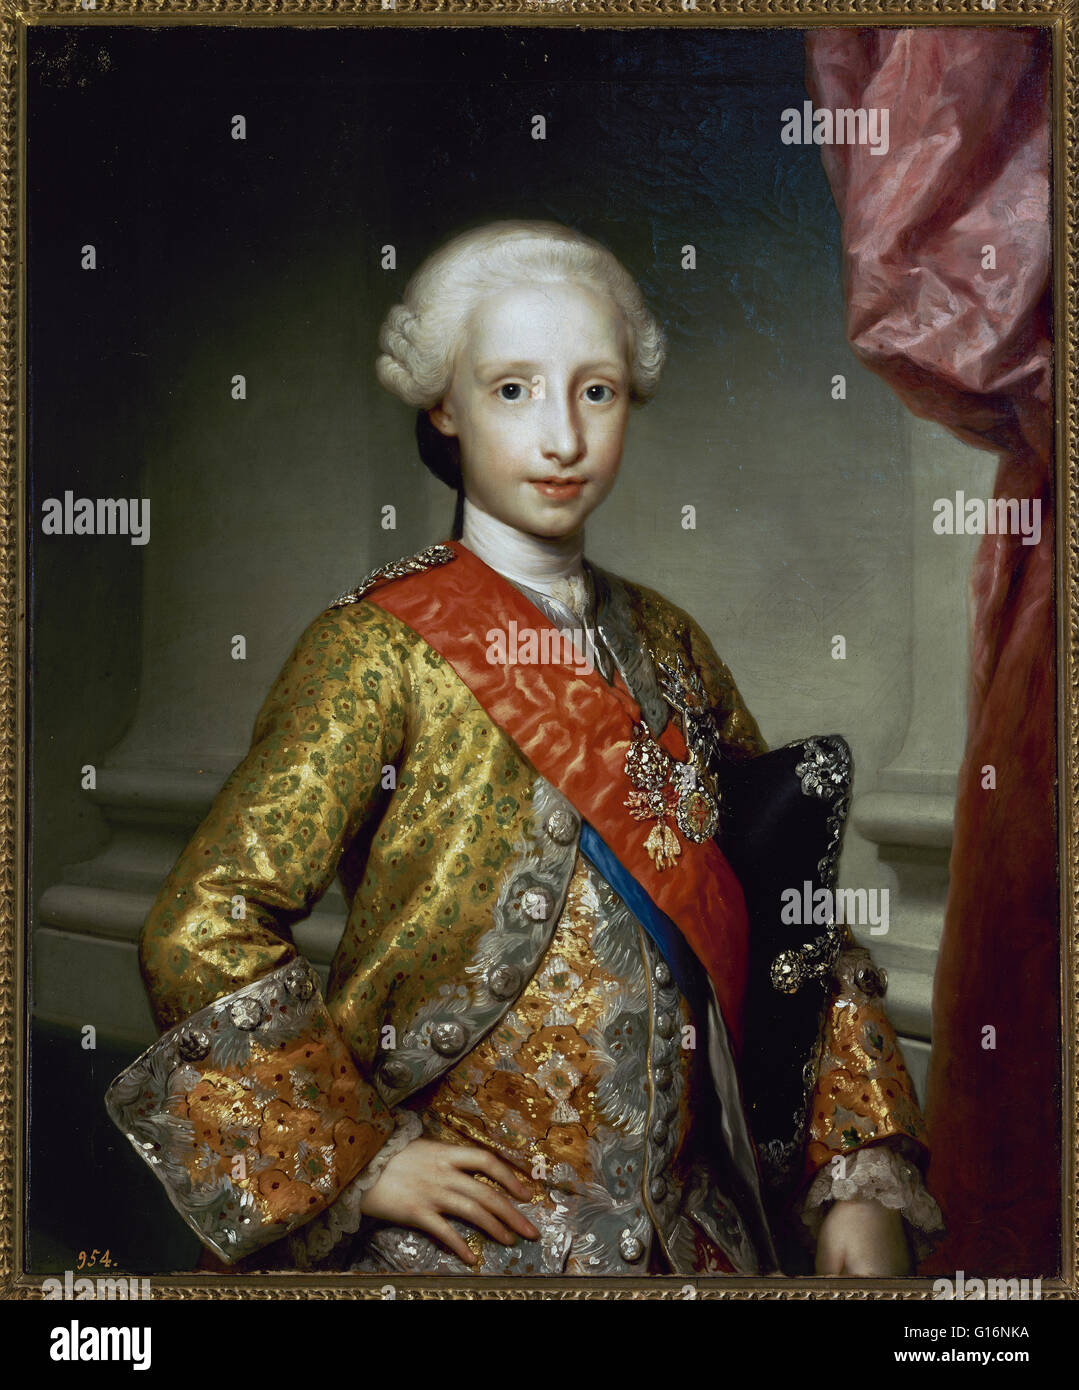 Antonio Pascual de Borbon y Sajonia (1755-1817). Infante of Spain. Portrait by Anton Raphael Mengs (1728-1779), 1767. Prado Museum. Madrid. Spain. Stock Photo